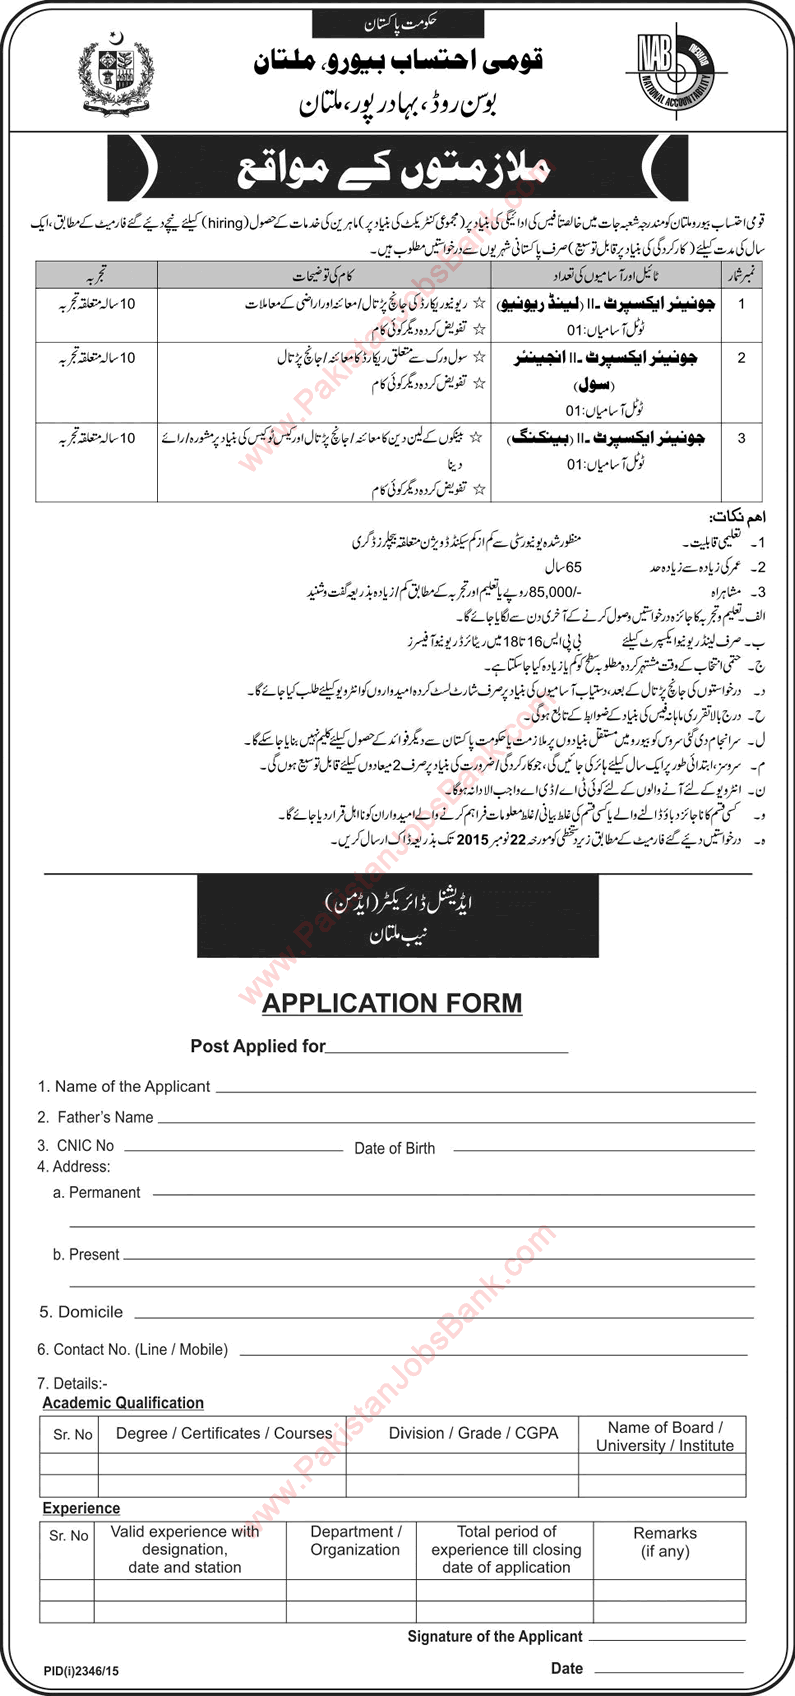 NAB Multan Jobs 2015 November Application Form Download for Junior Experts Latest